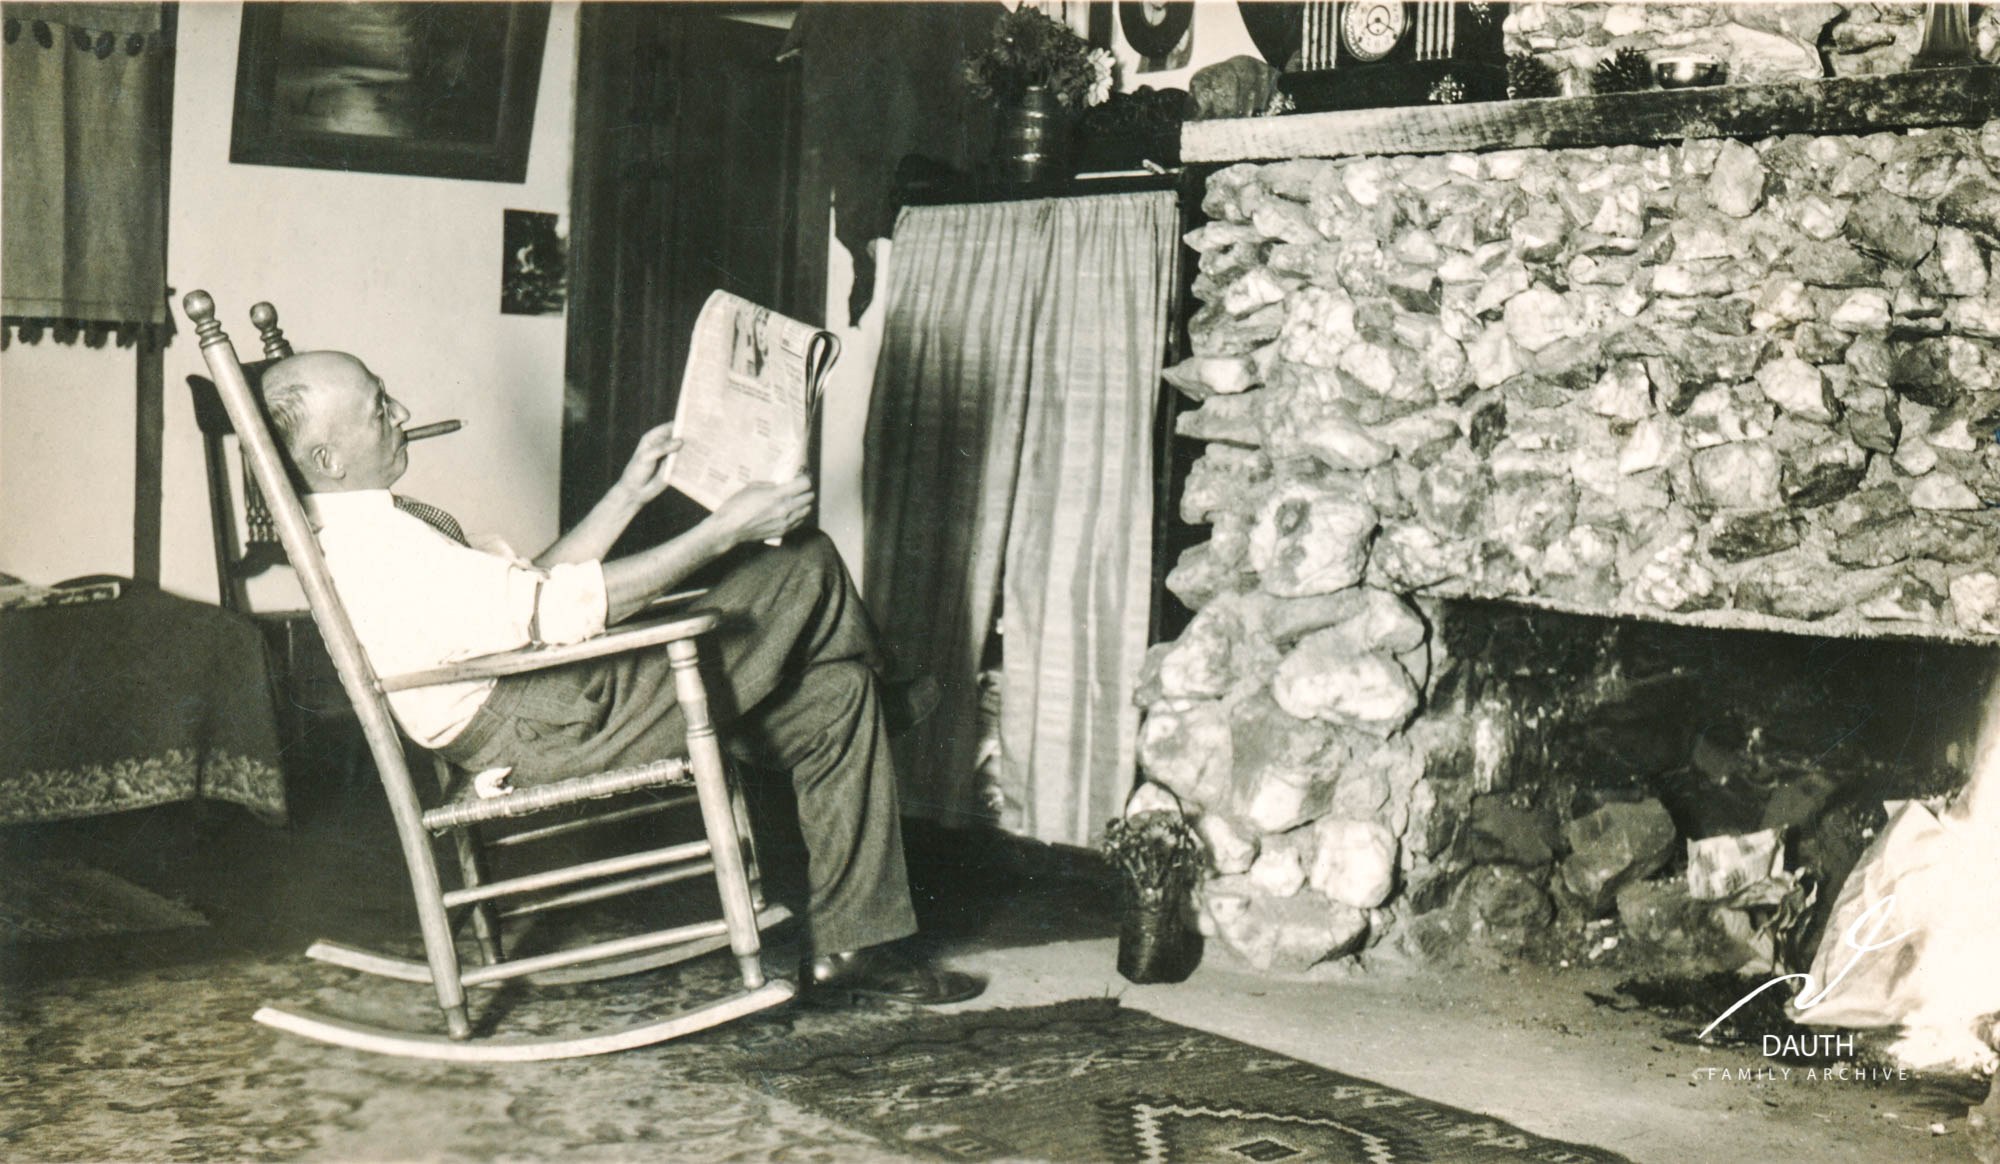 Idlewild Lodge - idlewildlodge.github.io - Circa 1930s - George Dauth sitting in front of the hearth of Idlewi